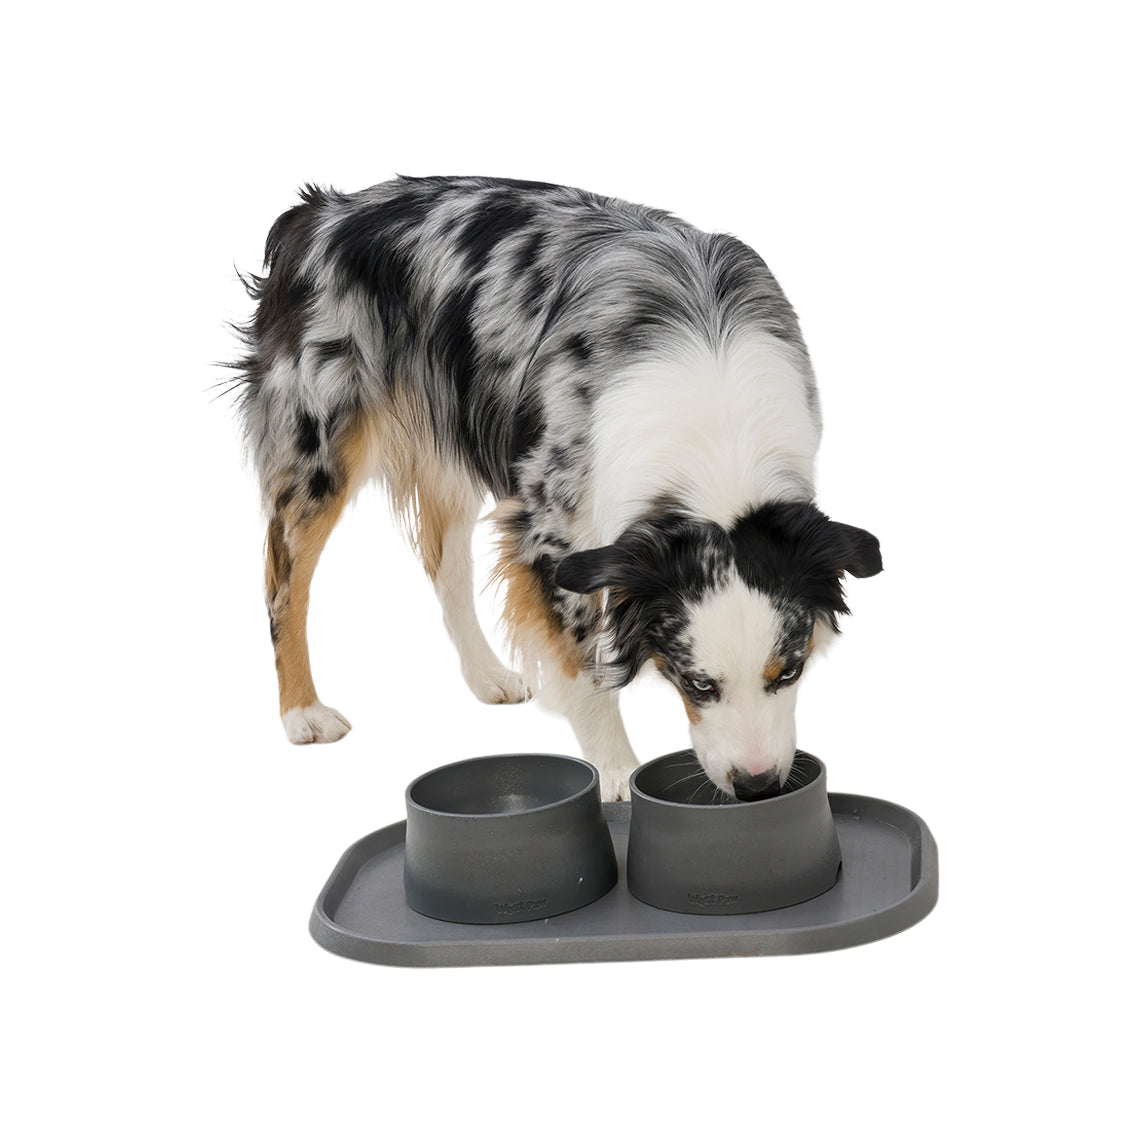 Paws & Pals Dog Food Mat - Anti-Slip Pet Feeding Mats, Multiple